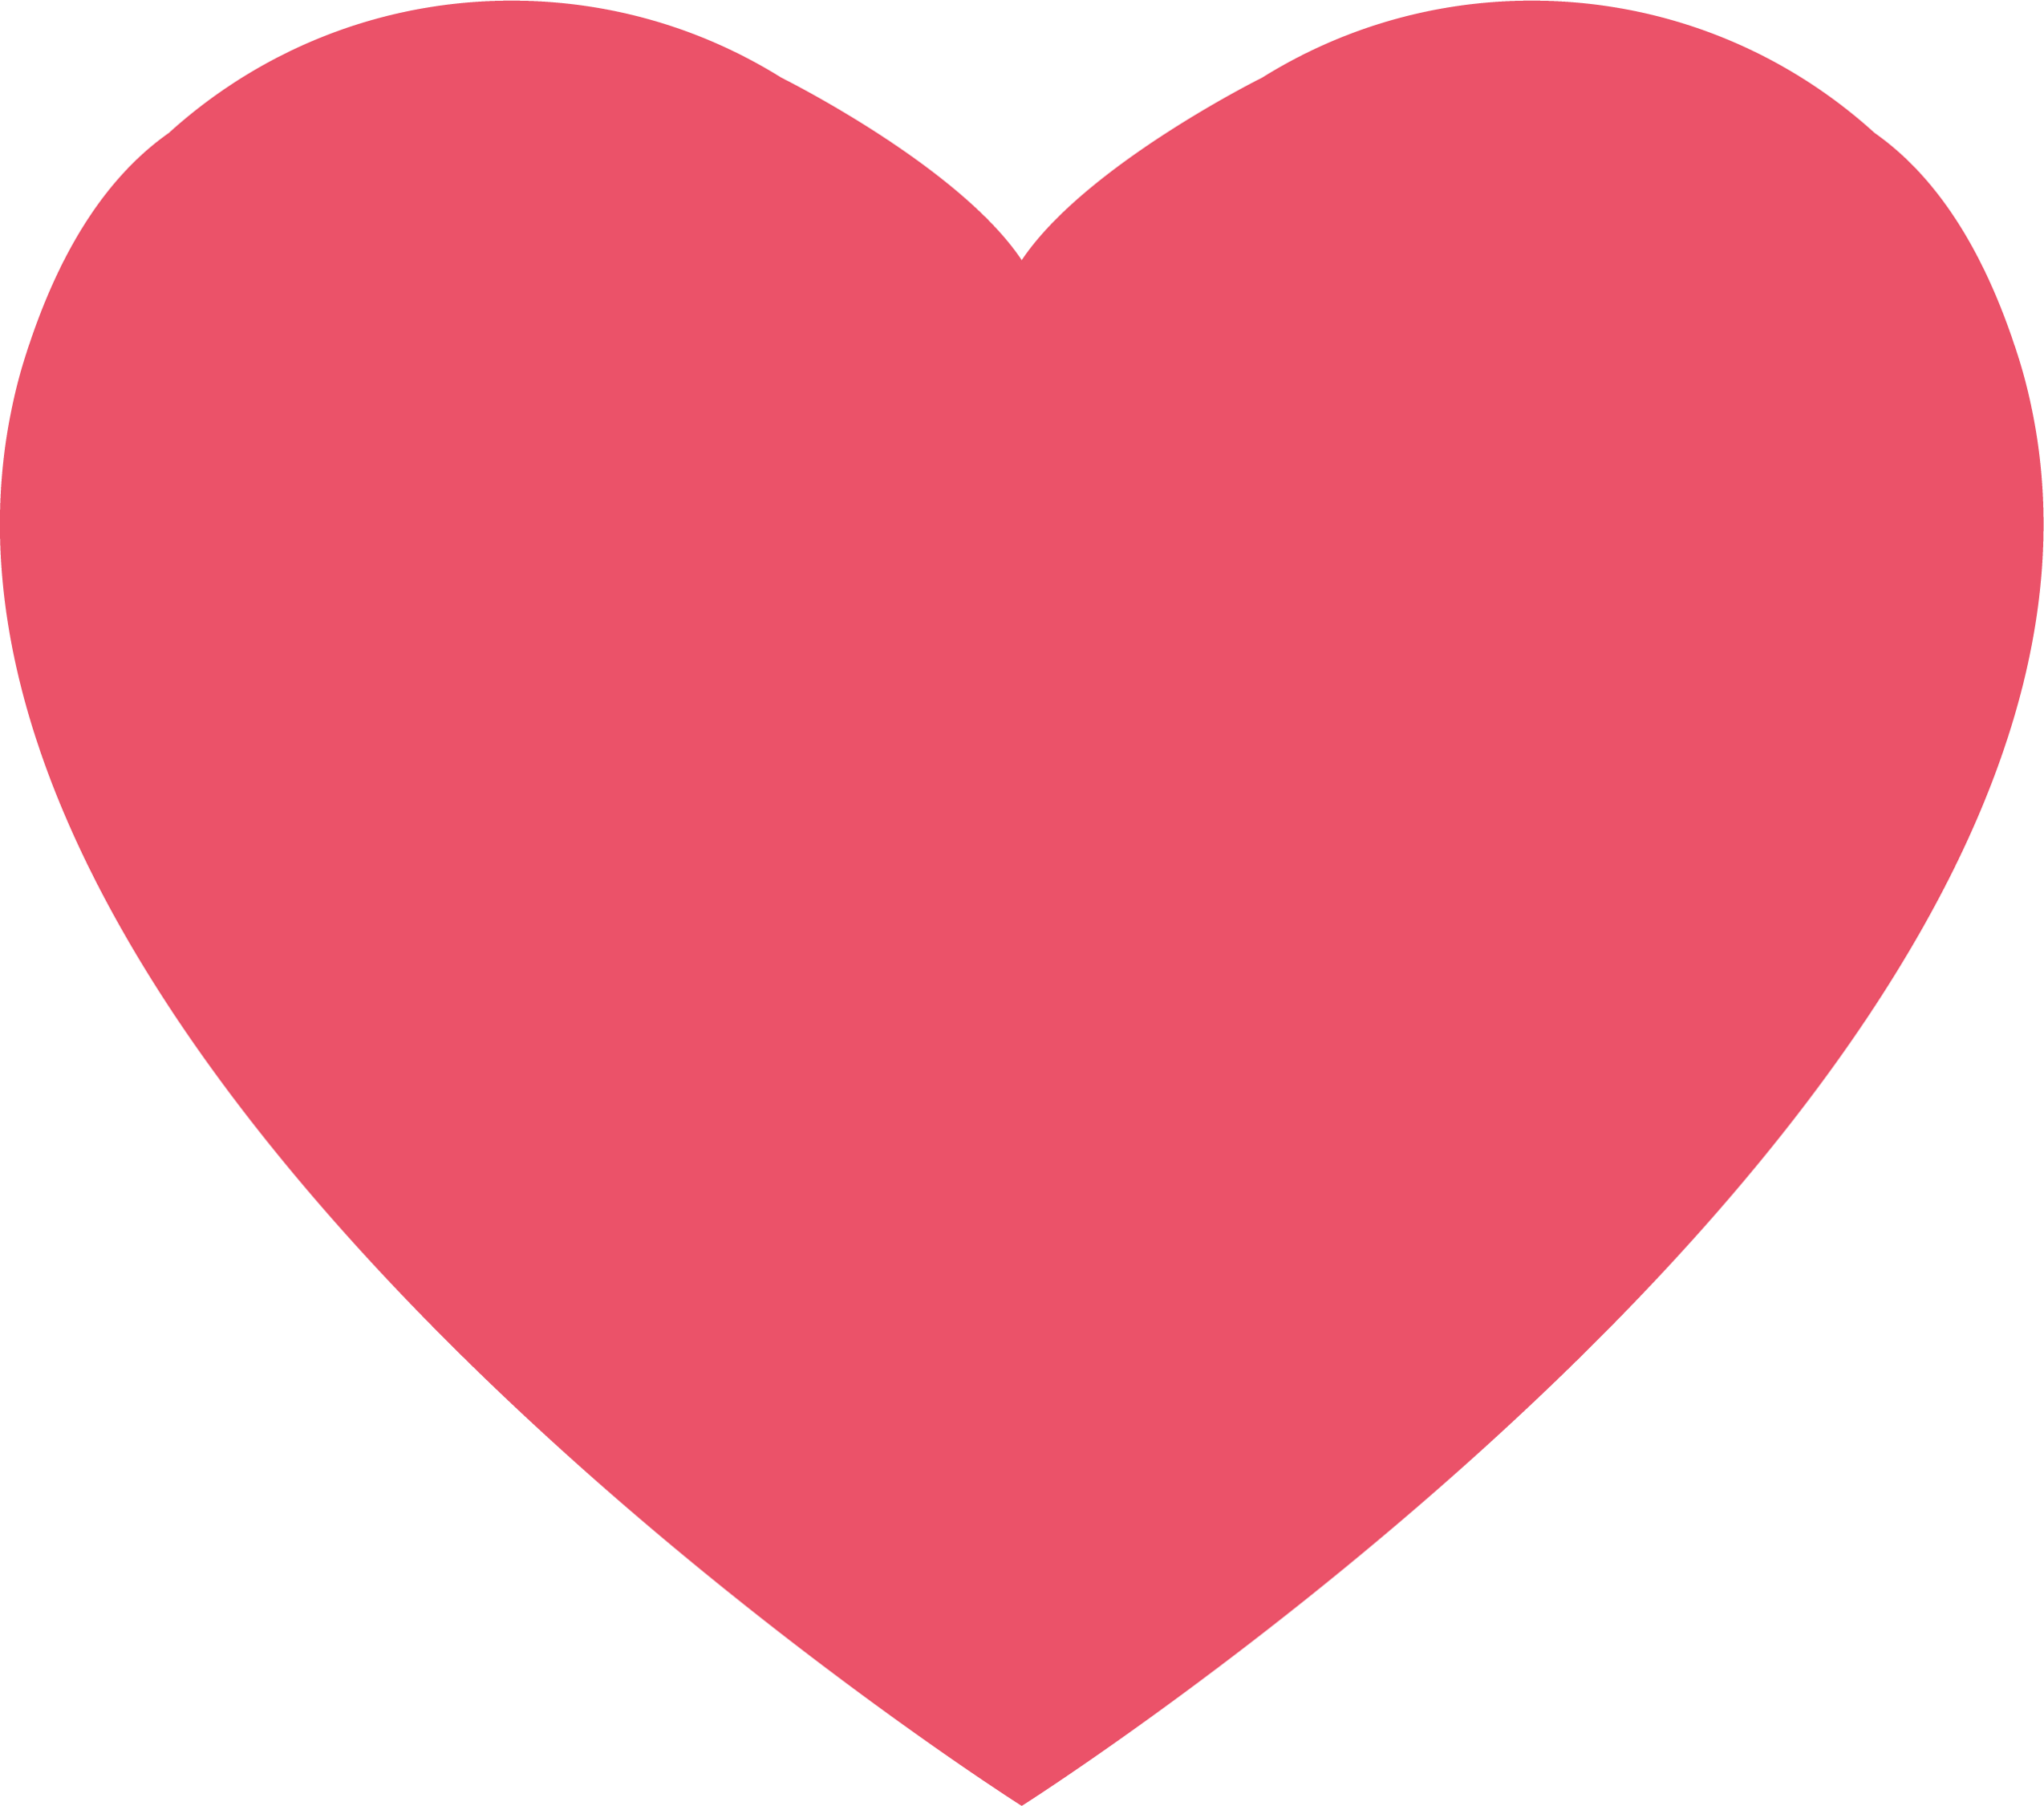 Heart Emoji PNG Image File